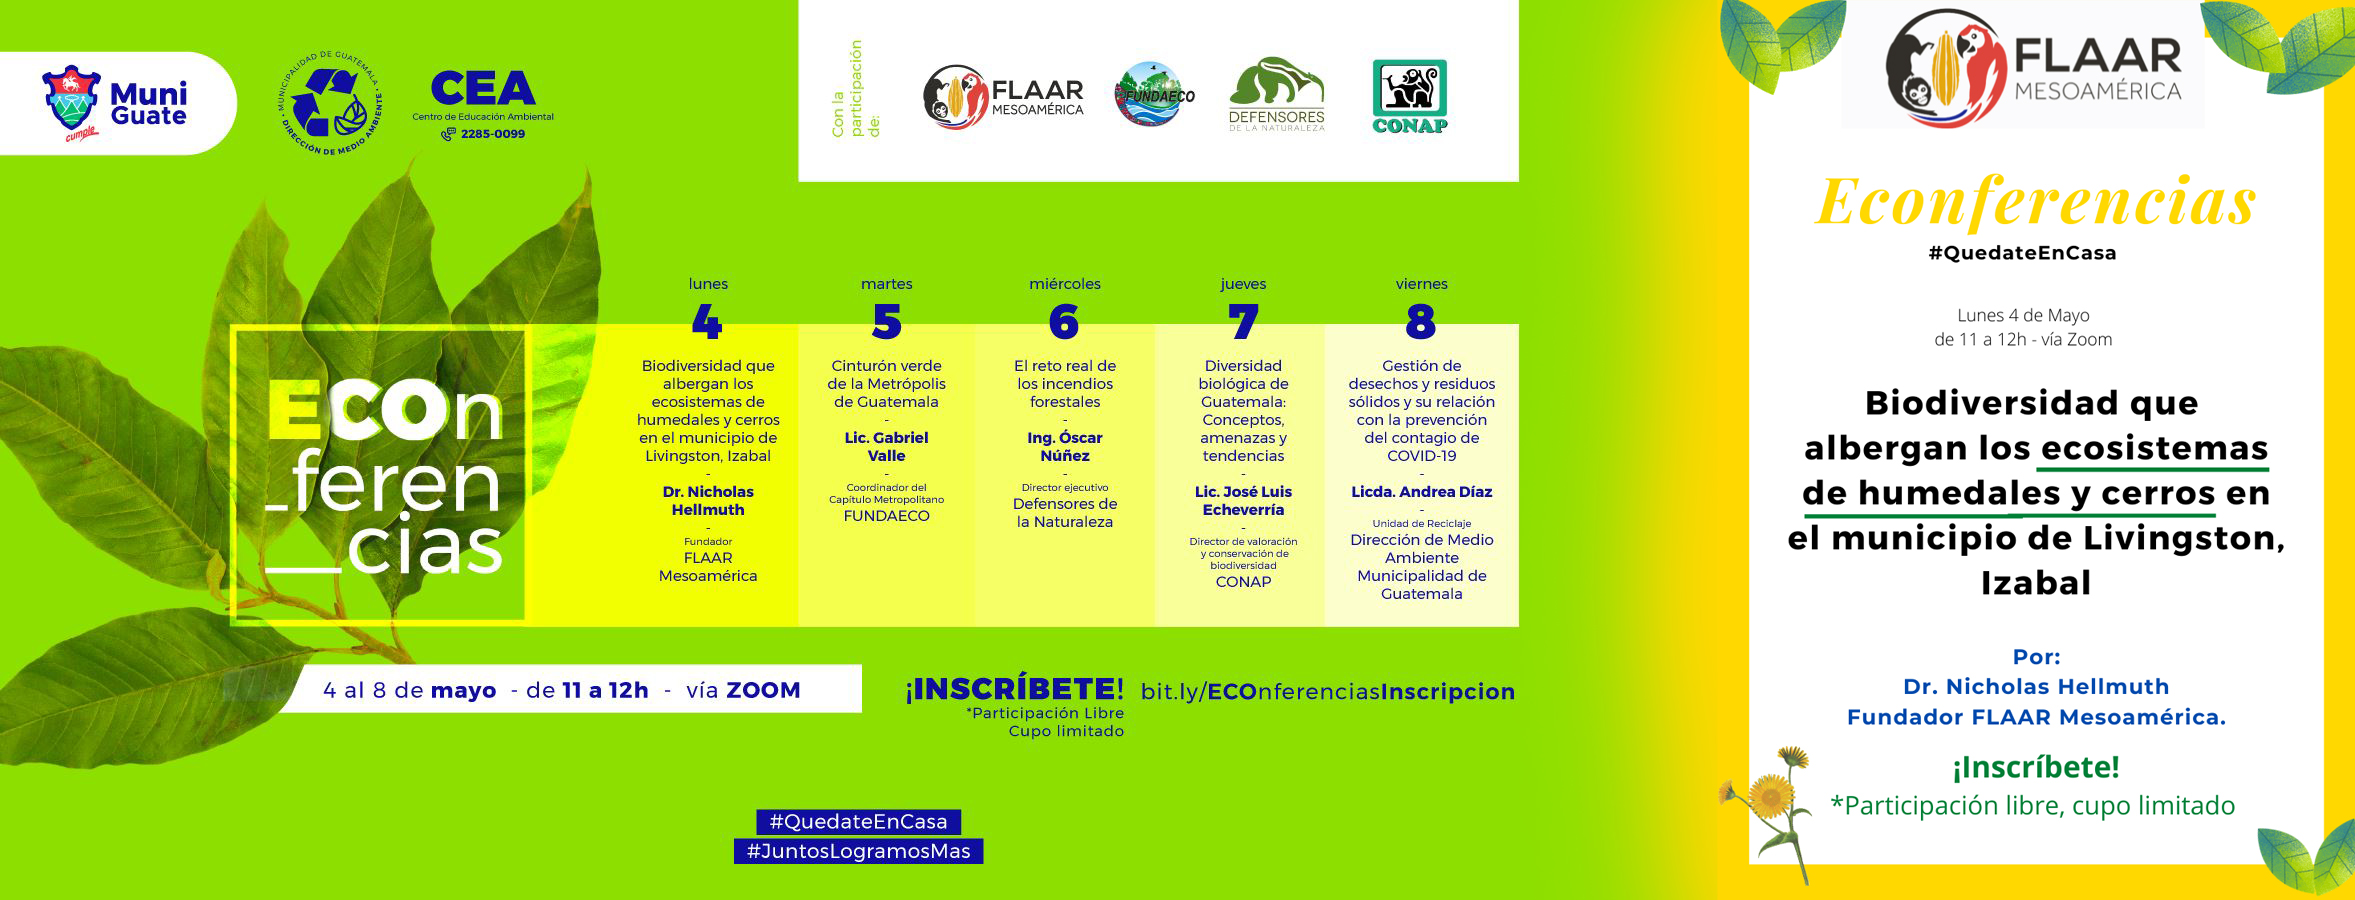 econferencias-Biodiversidad-de-Livingston-Izabal-FLAAR-Mesoamerica-2020